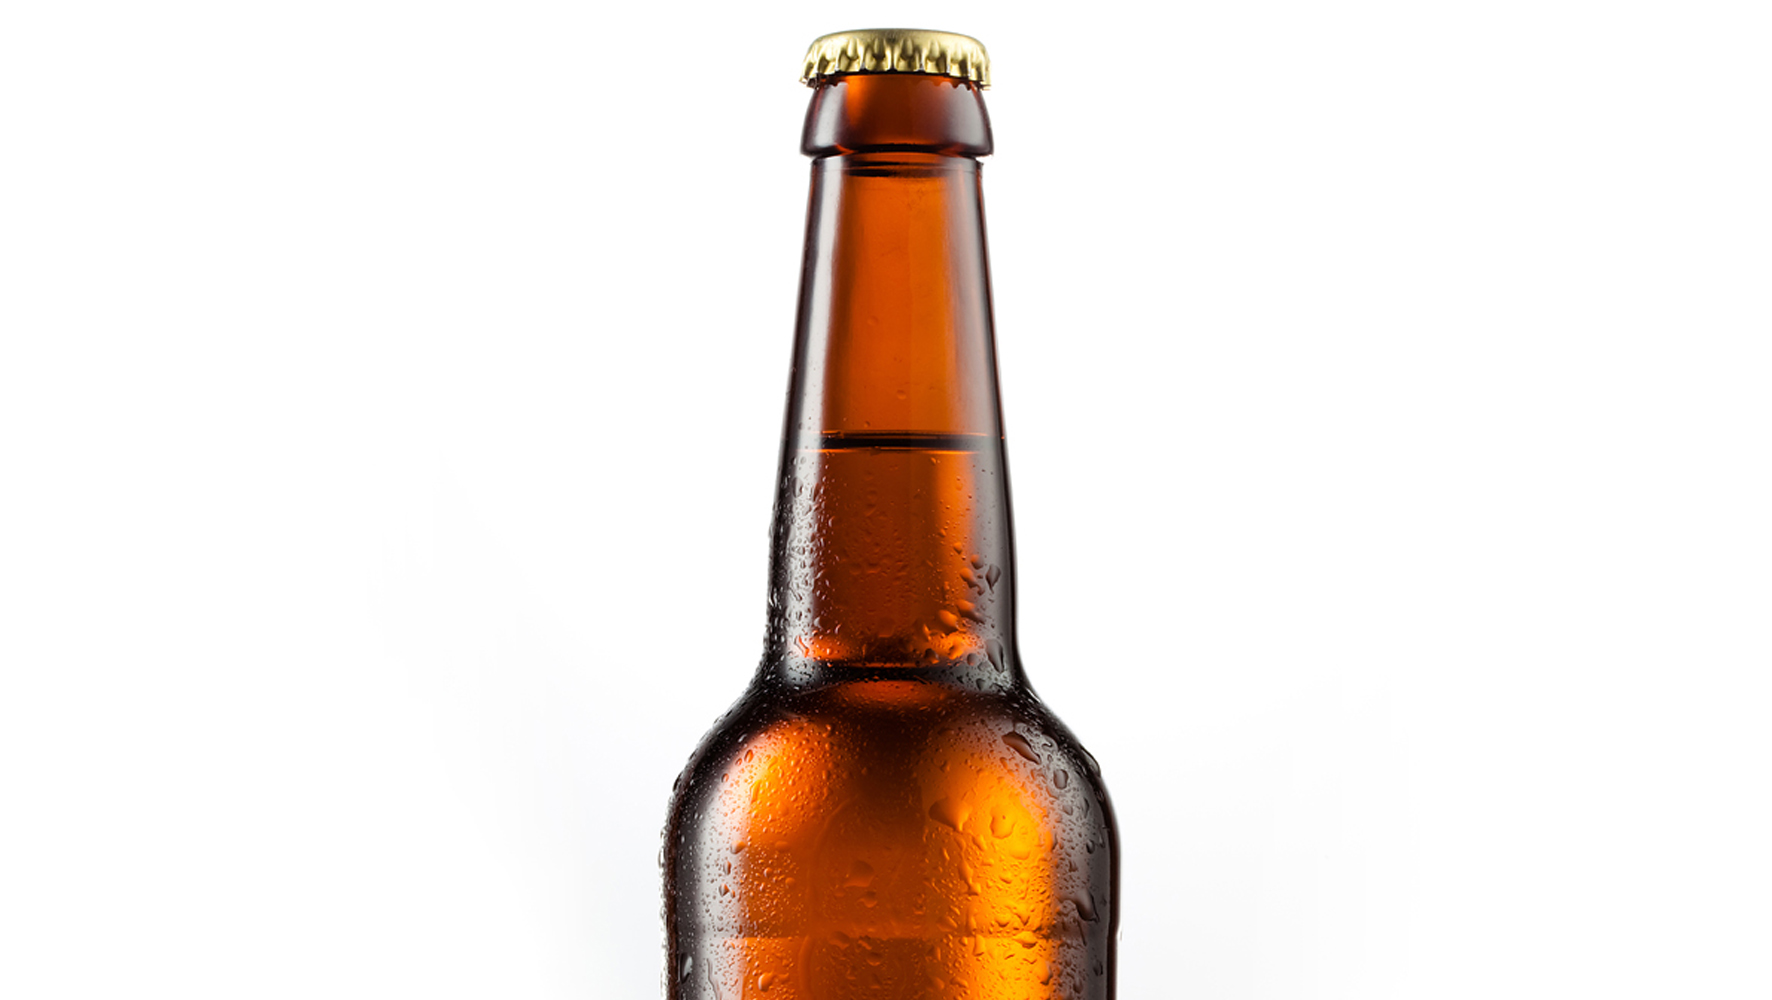 beer bottle containing beer